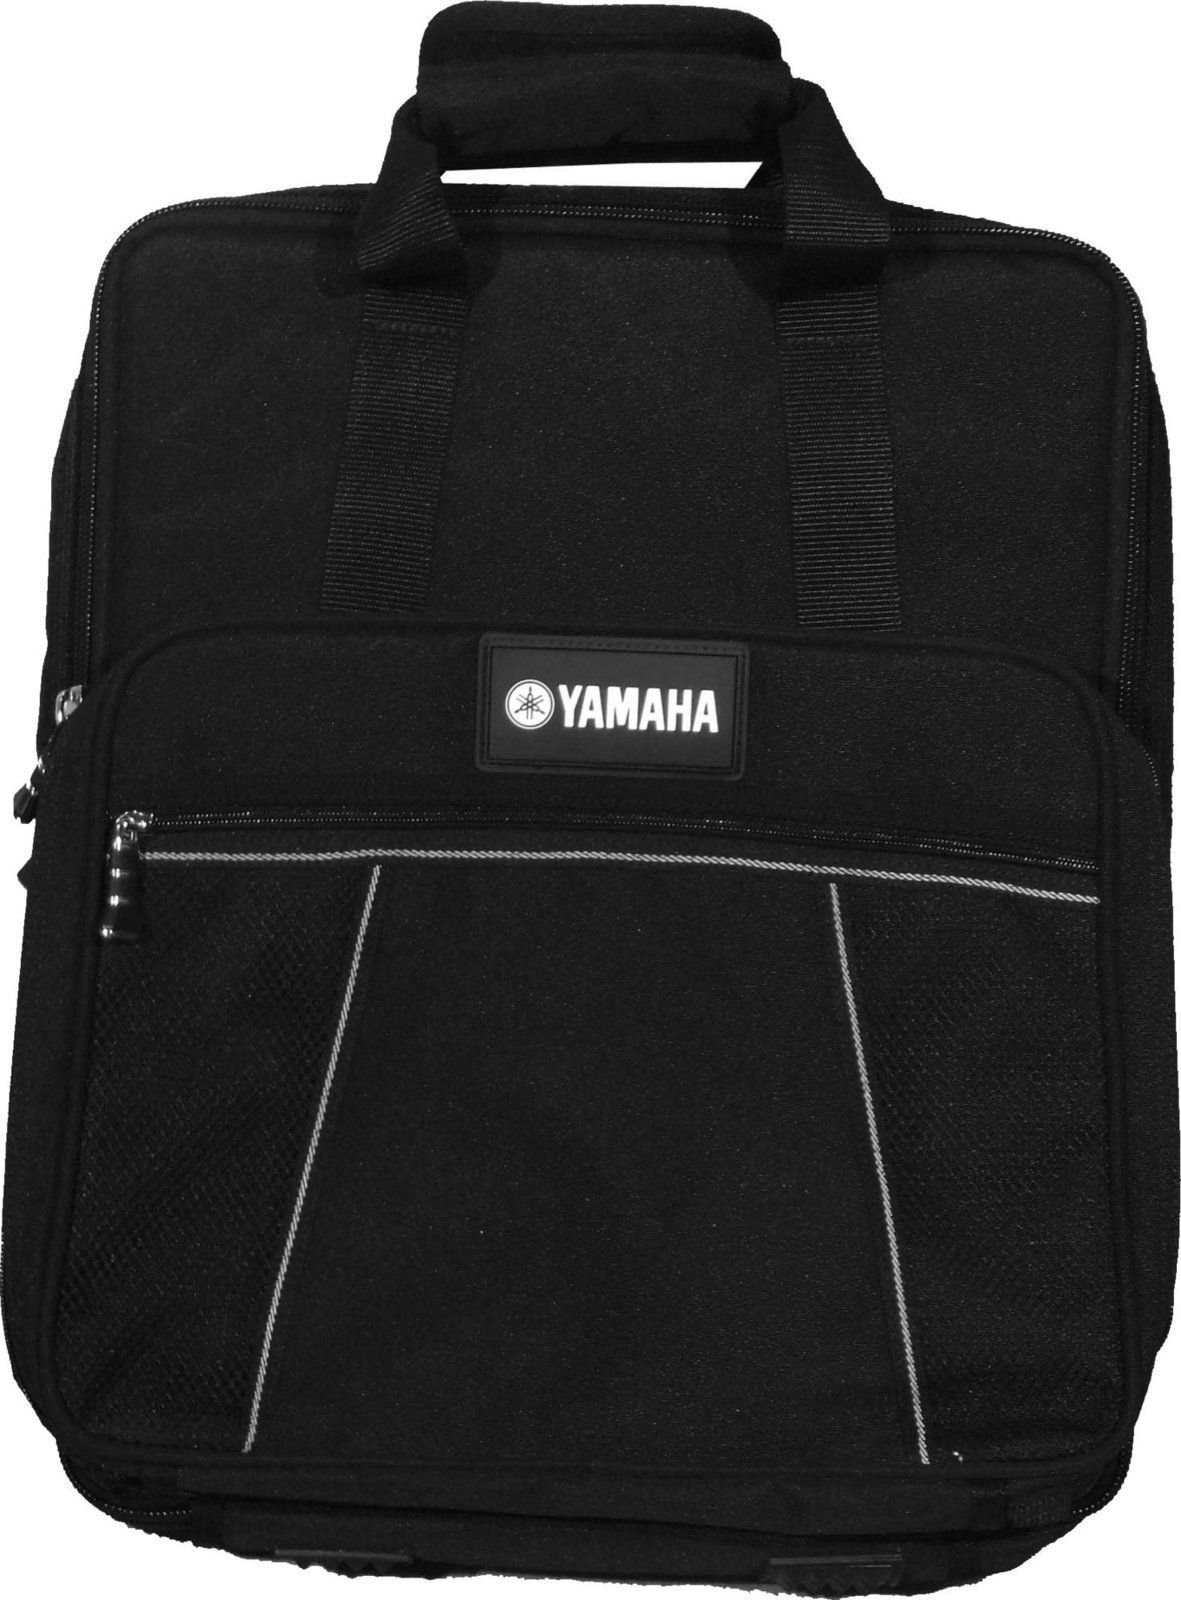 Bag / Case for Audio Equipment Yamaha SCMG12